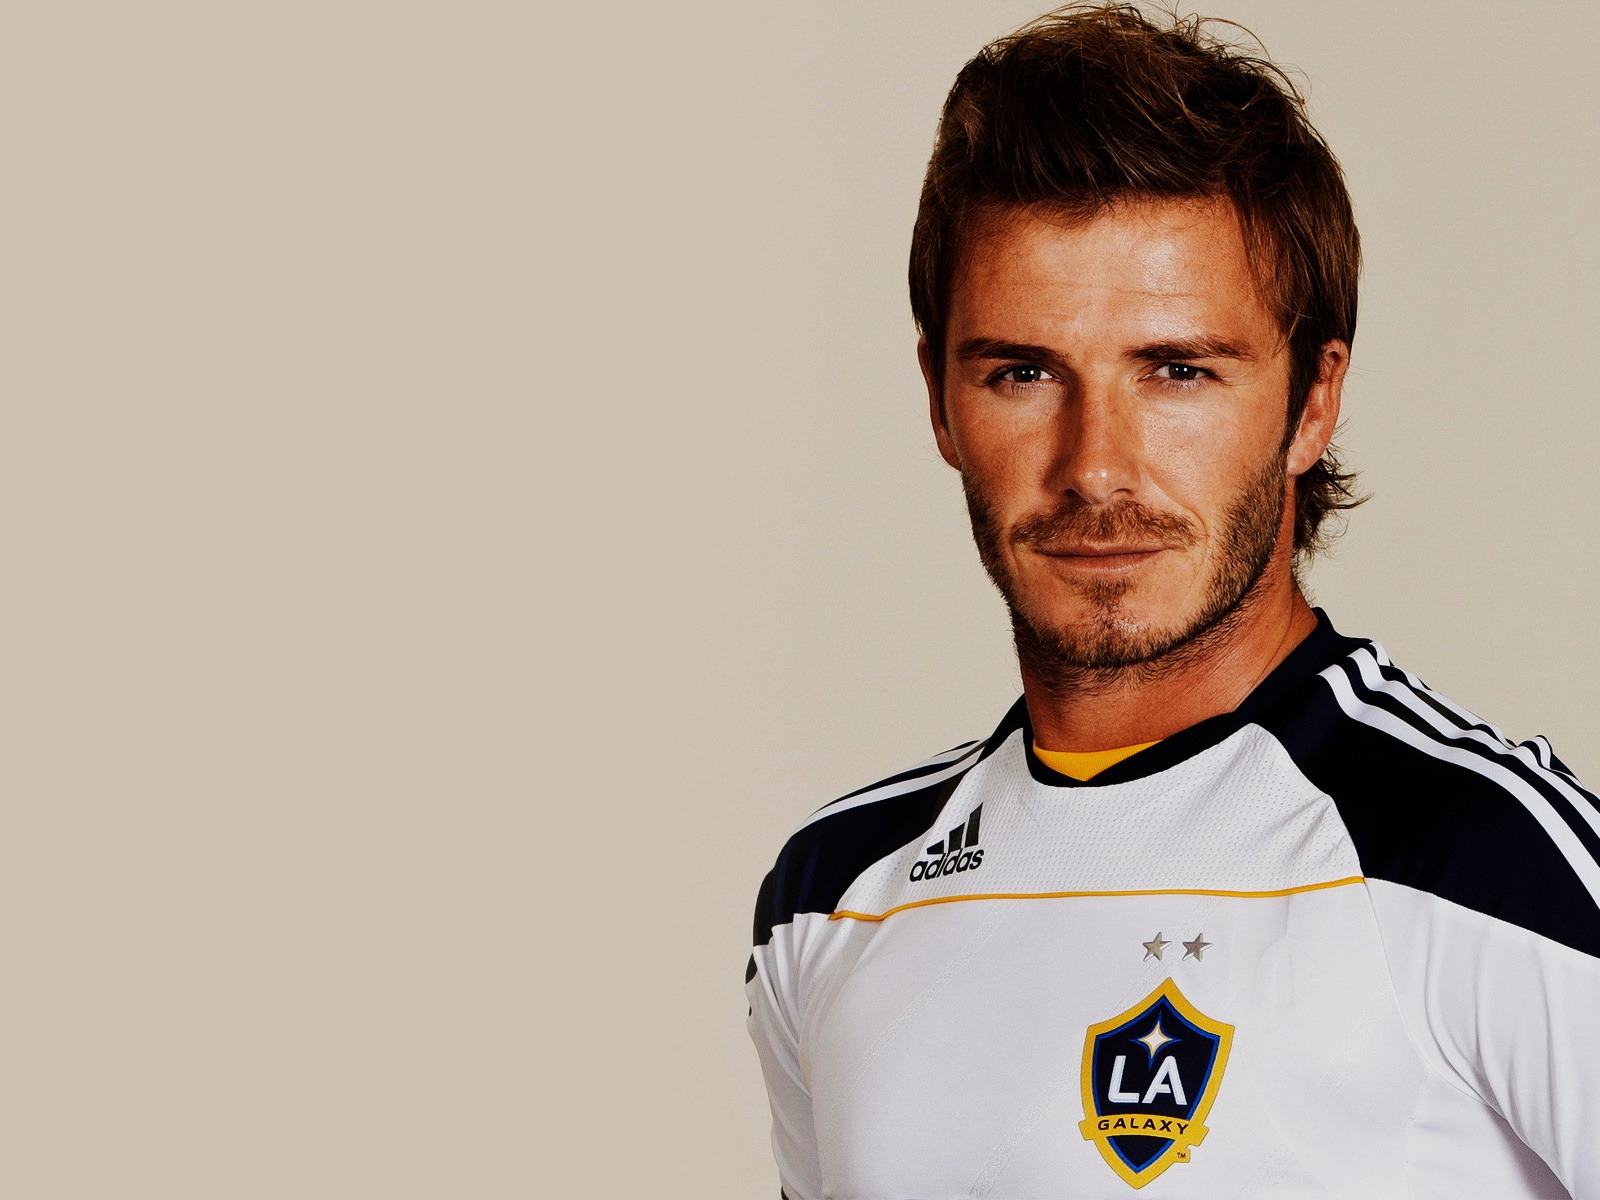 David Beckham Smile for 1600 x 1200 resolution